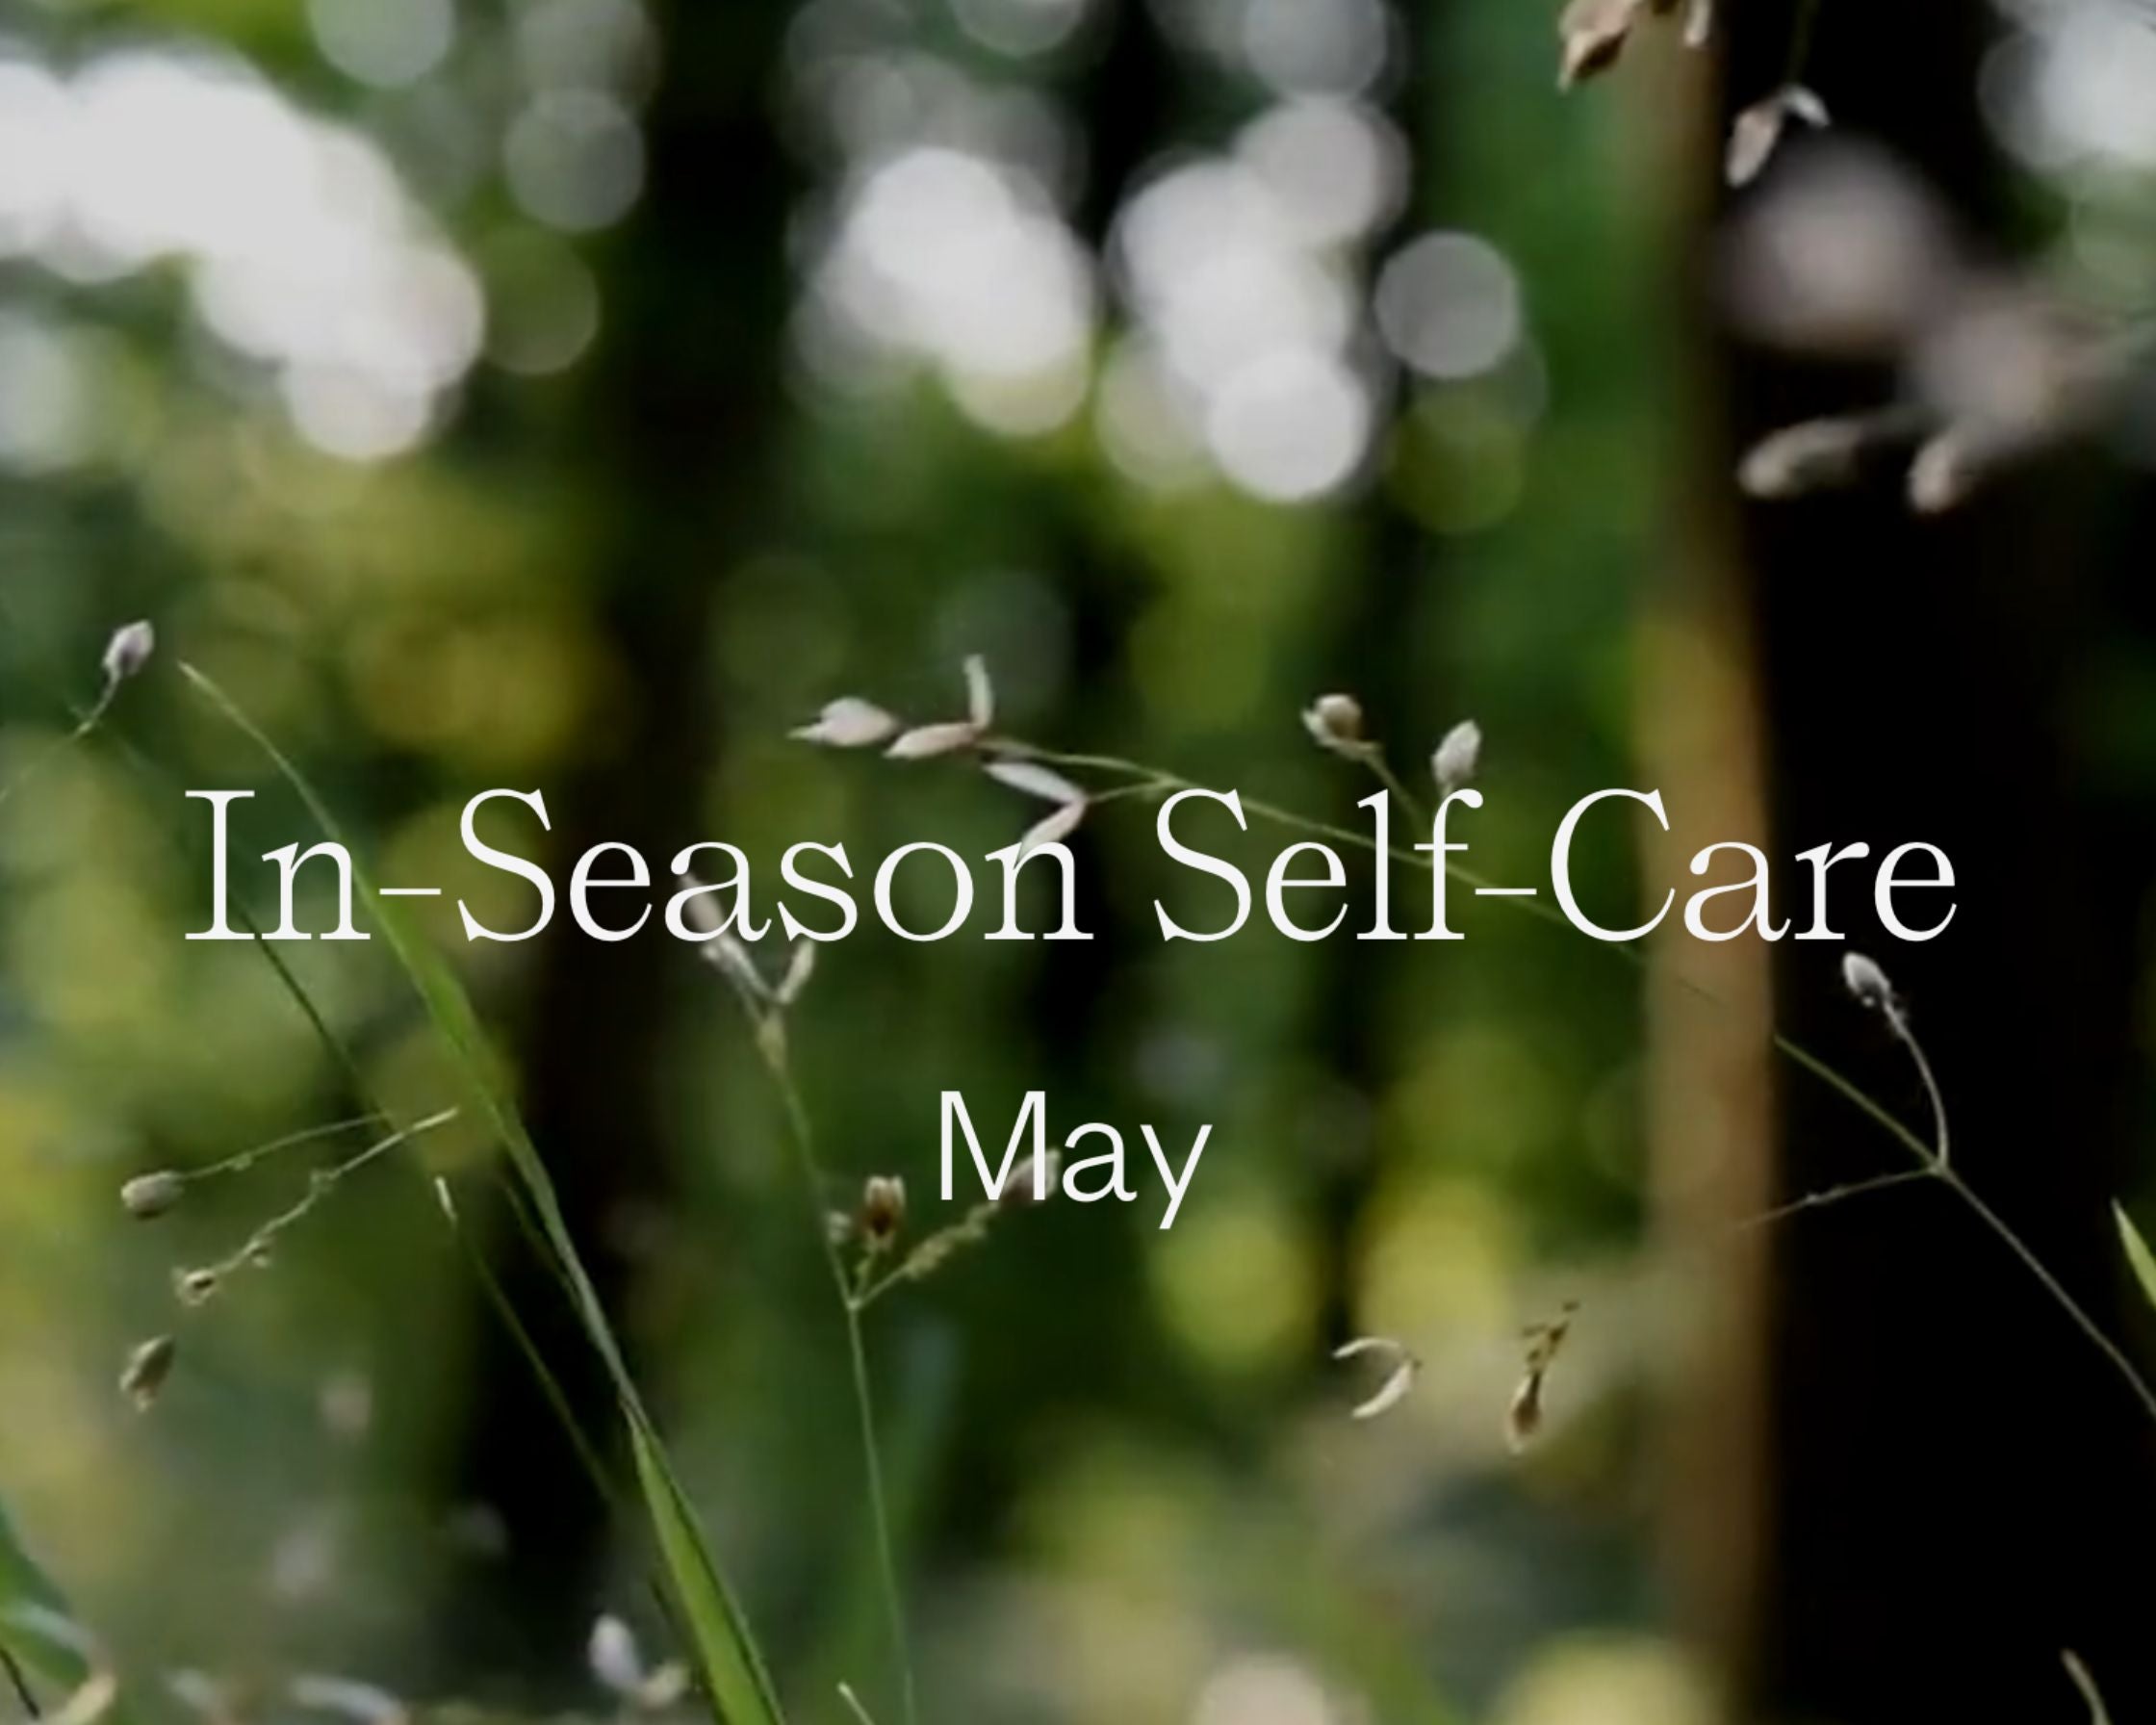 In Season Self-Care: May